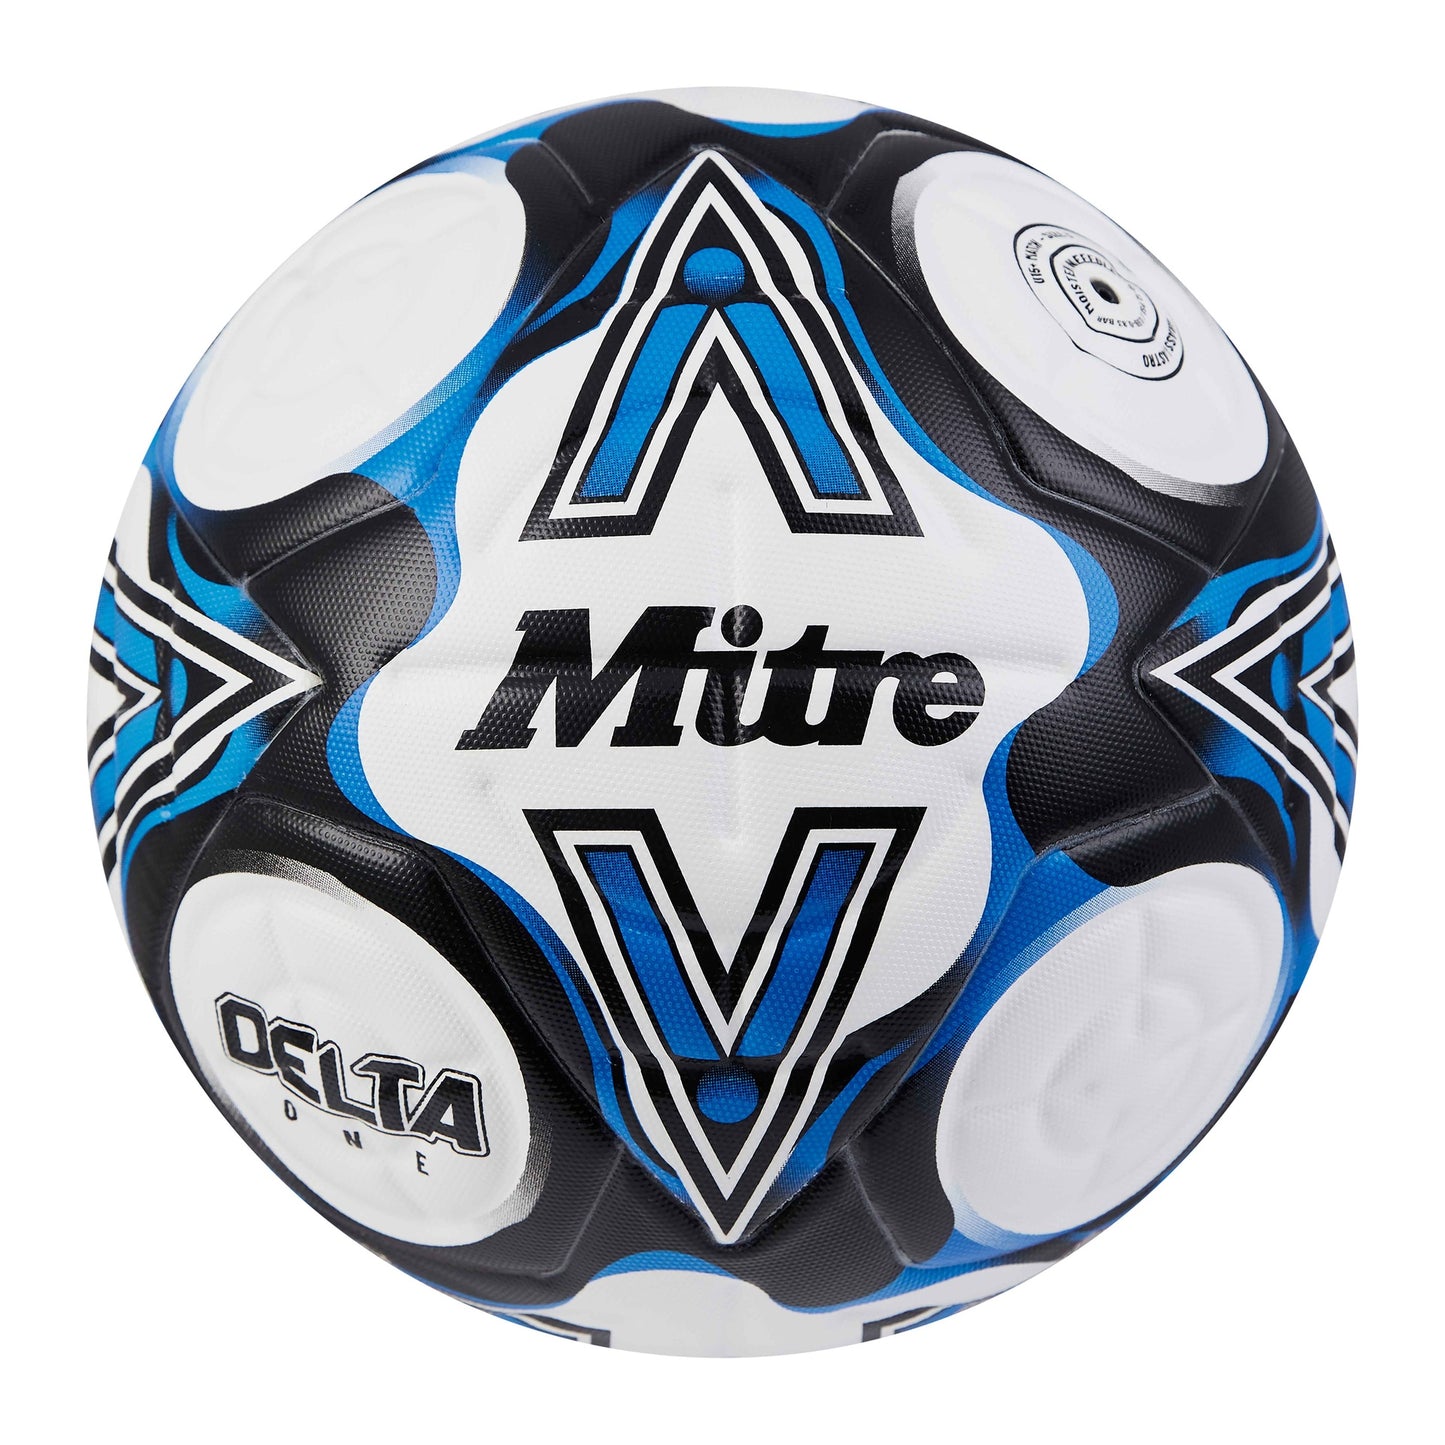 Mitre Delta One Football - 4 - White/Black/Blue